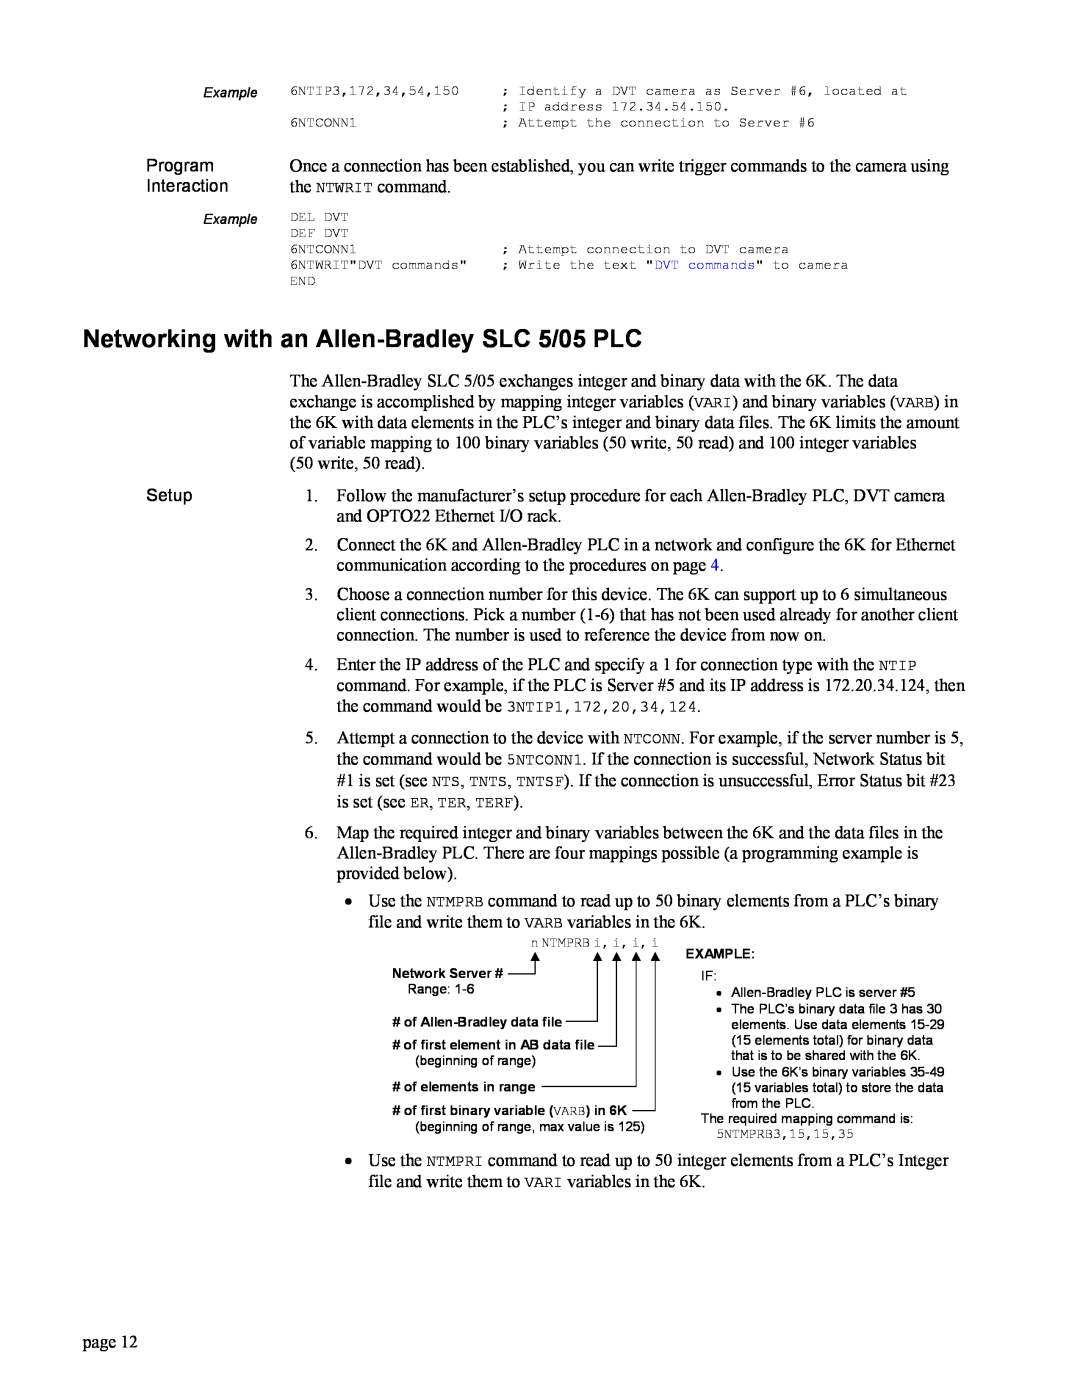 Parker Hannifin 6K Networking with an Allen-Bradley SLC 5/05 PLC, Network Server #, # of Allen-Bradley data file, Example 